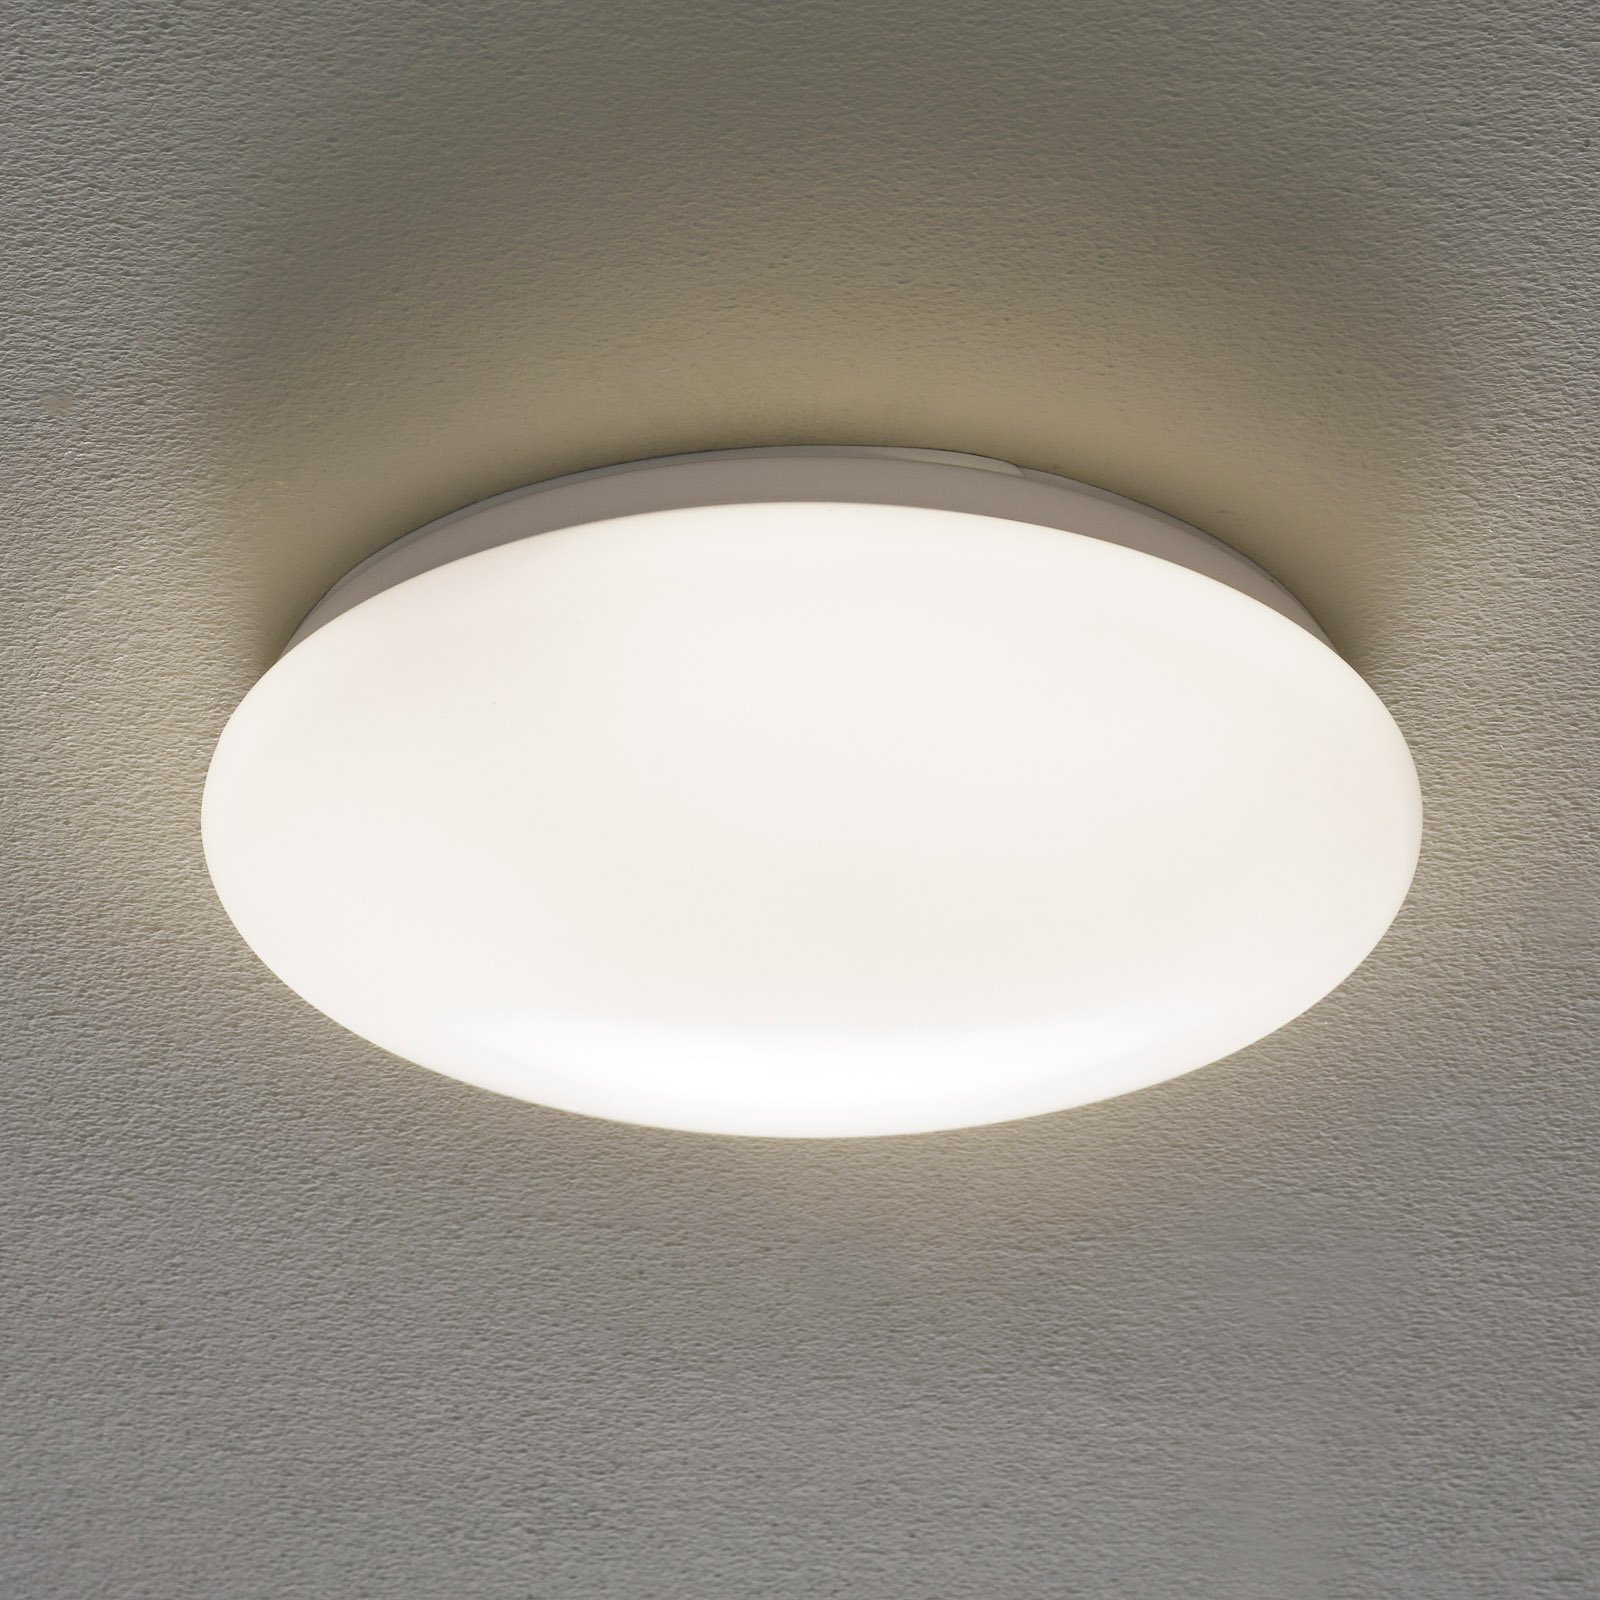 Altona LED ceiling light Ø 27,6 cm 950 lm 4,000K